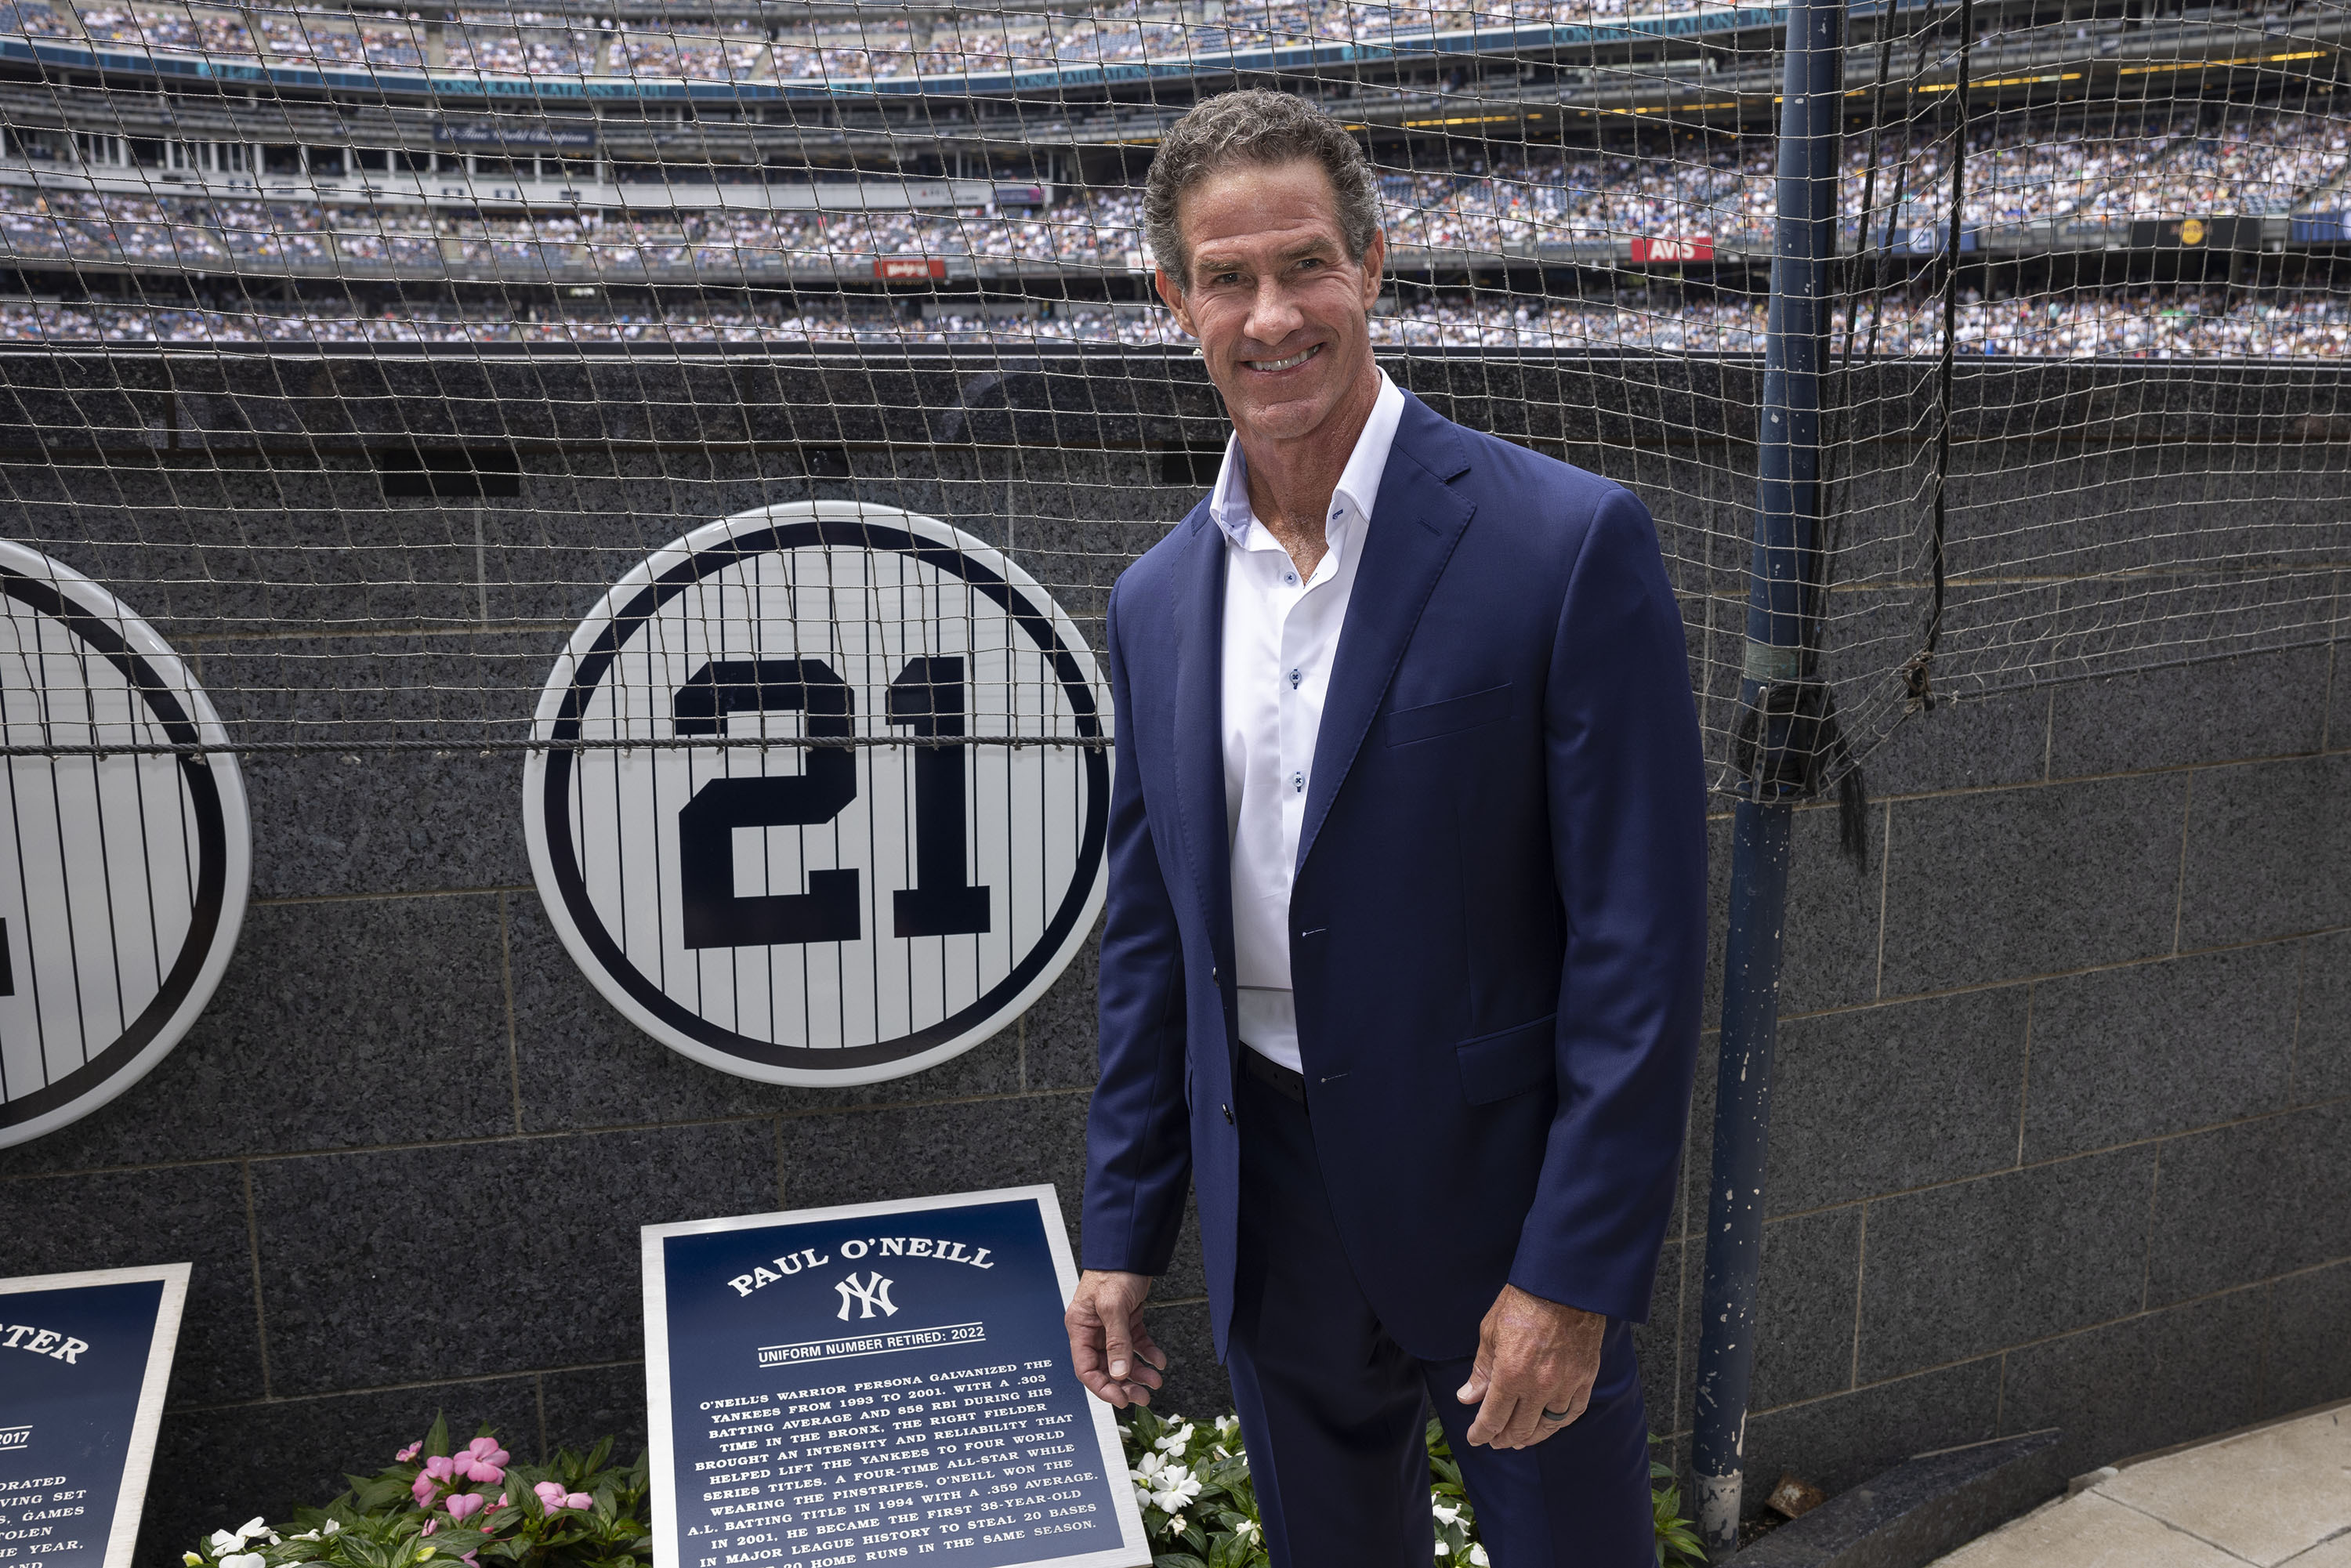 Yankees Retire Jorge Posada's No. 20, With a Nod to No. 15 - The